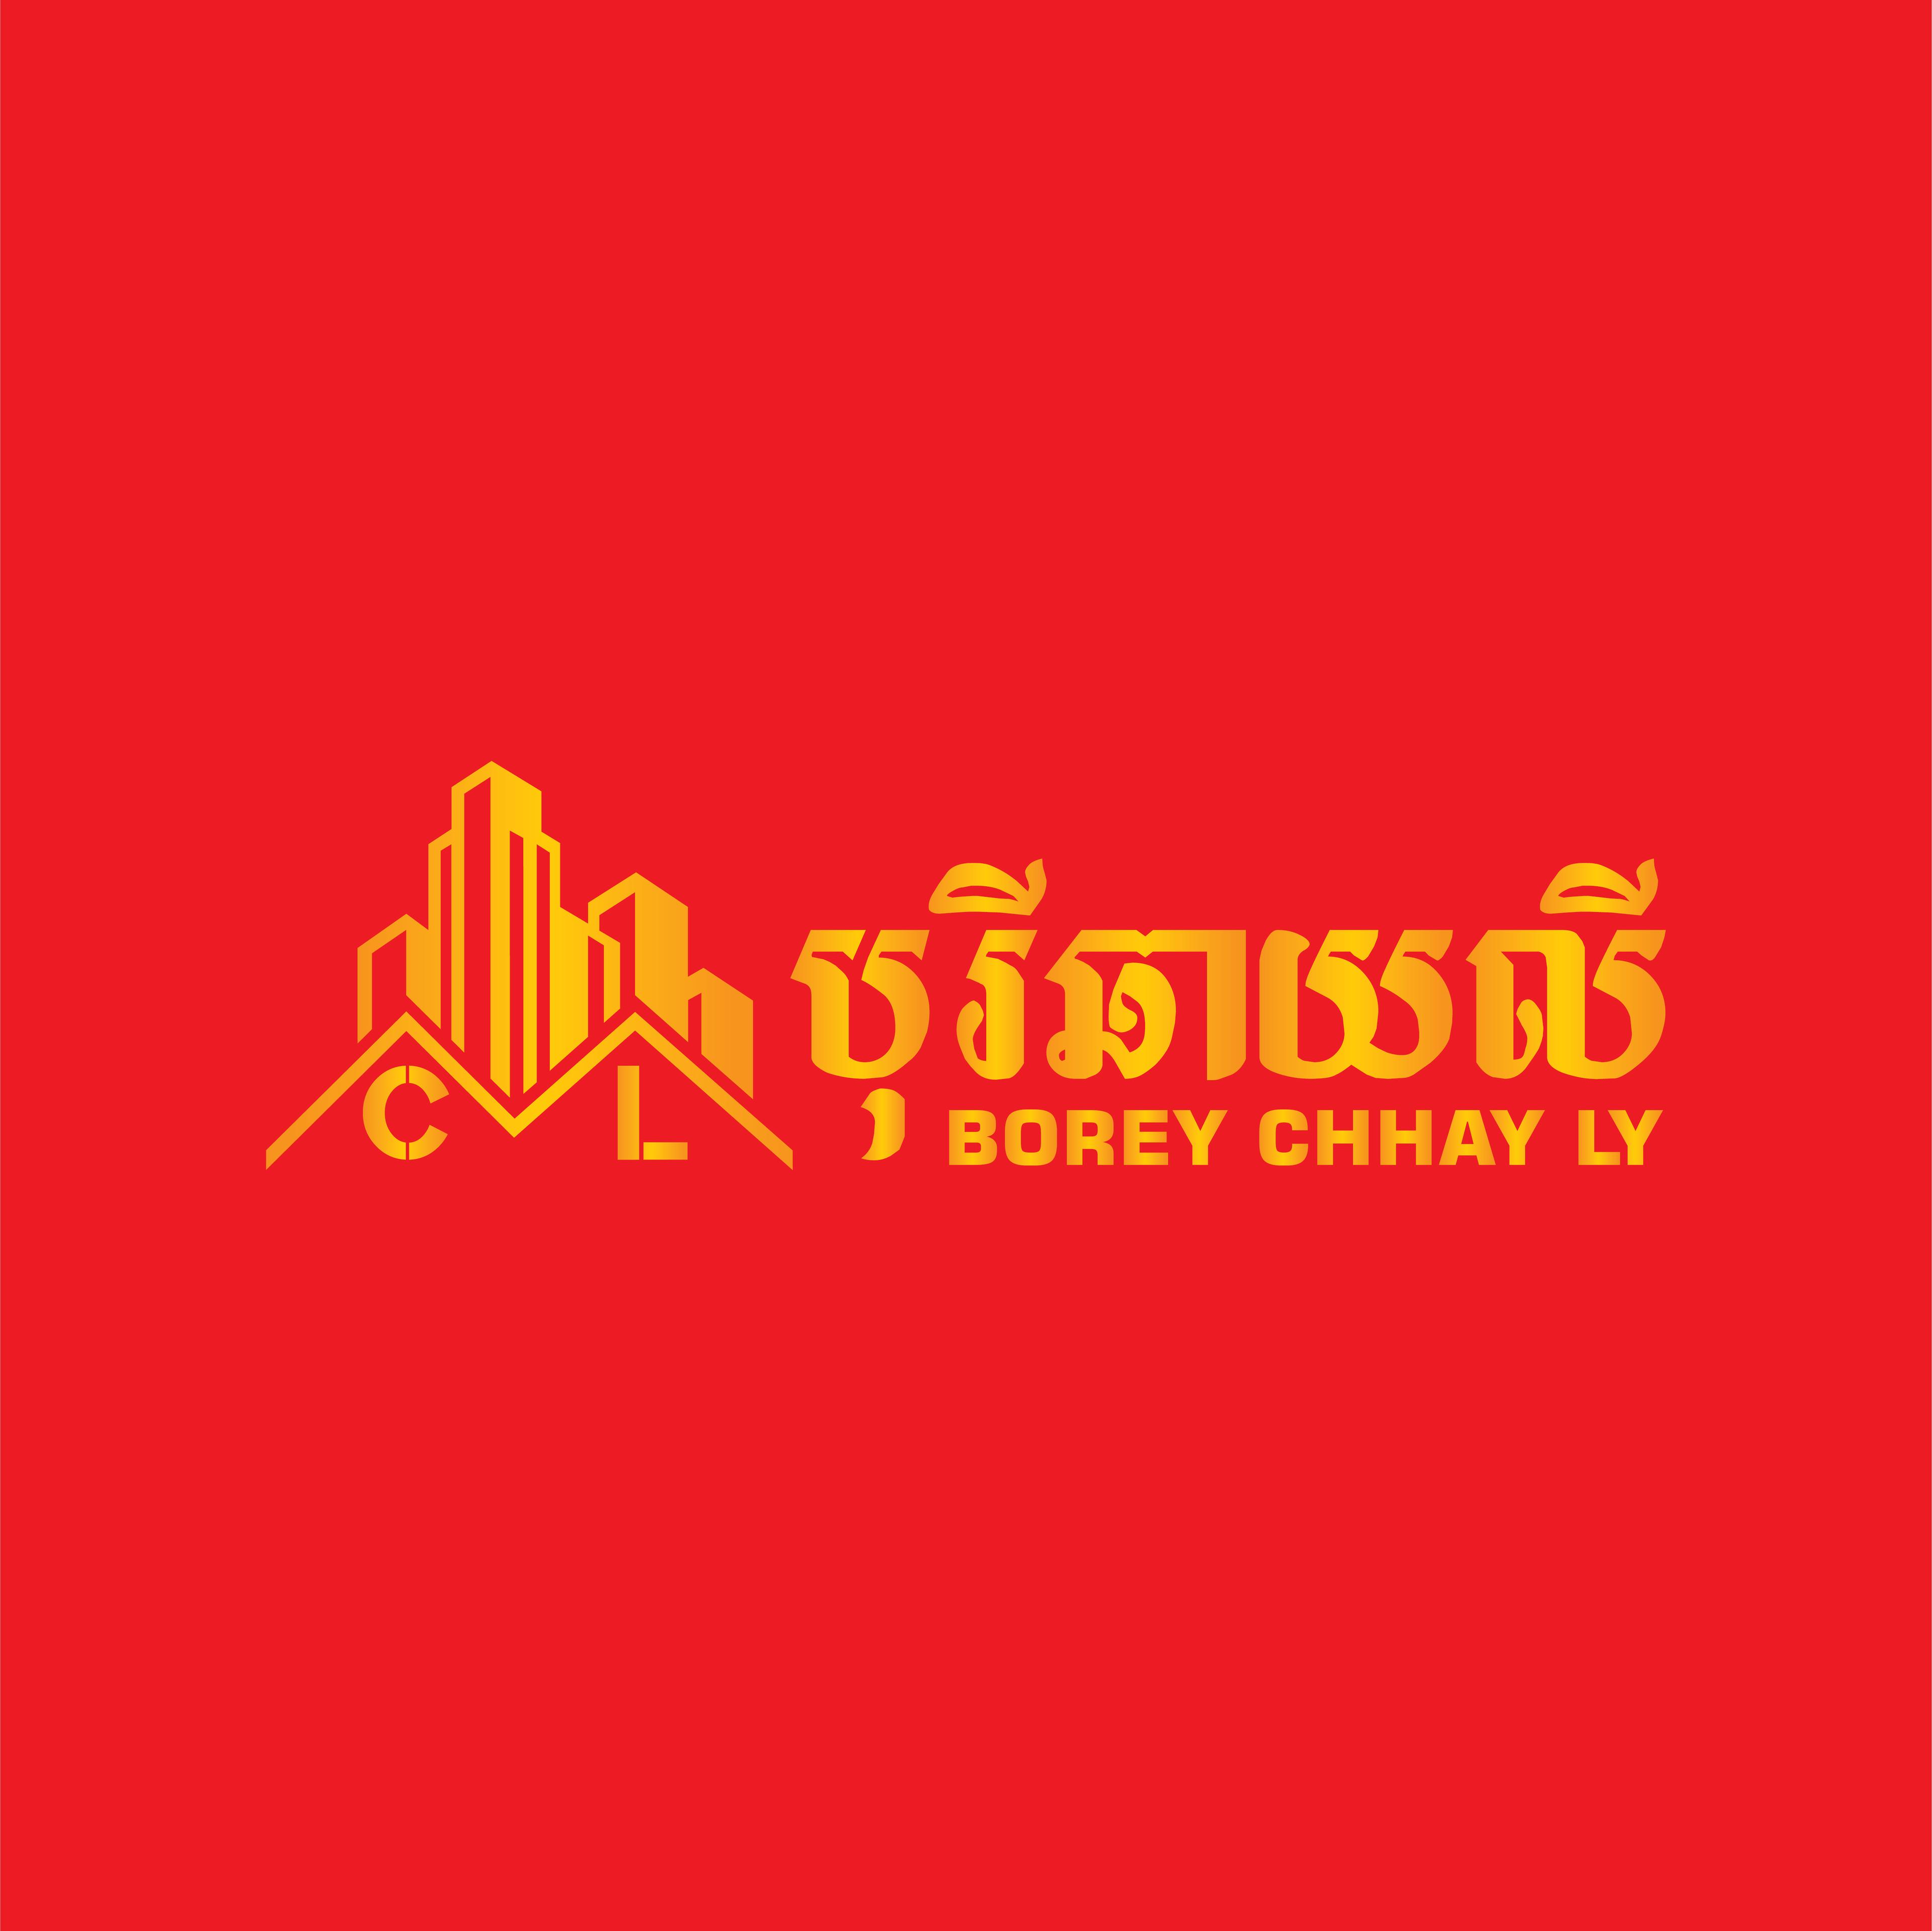 Borey Chhayly